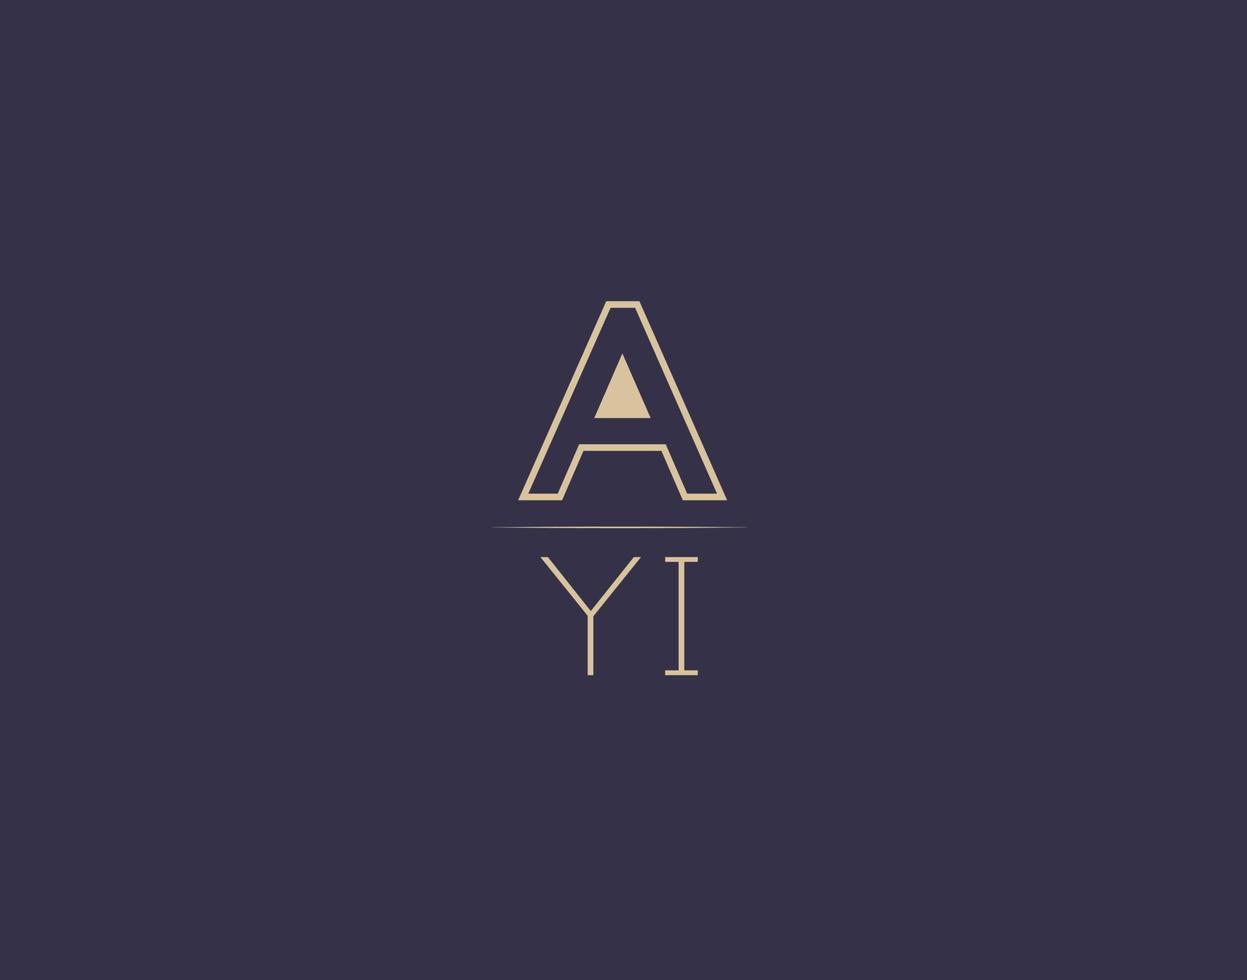 ayi brief logo ontwerp modern minimalistische vector afbeeldingen